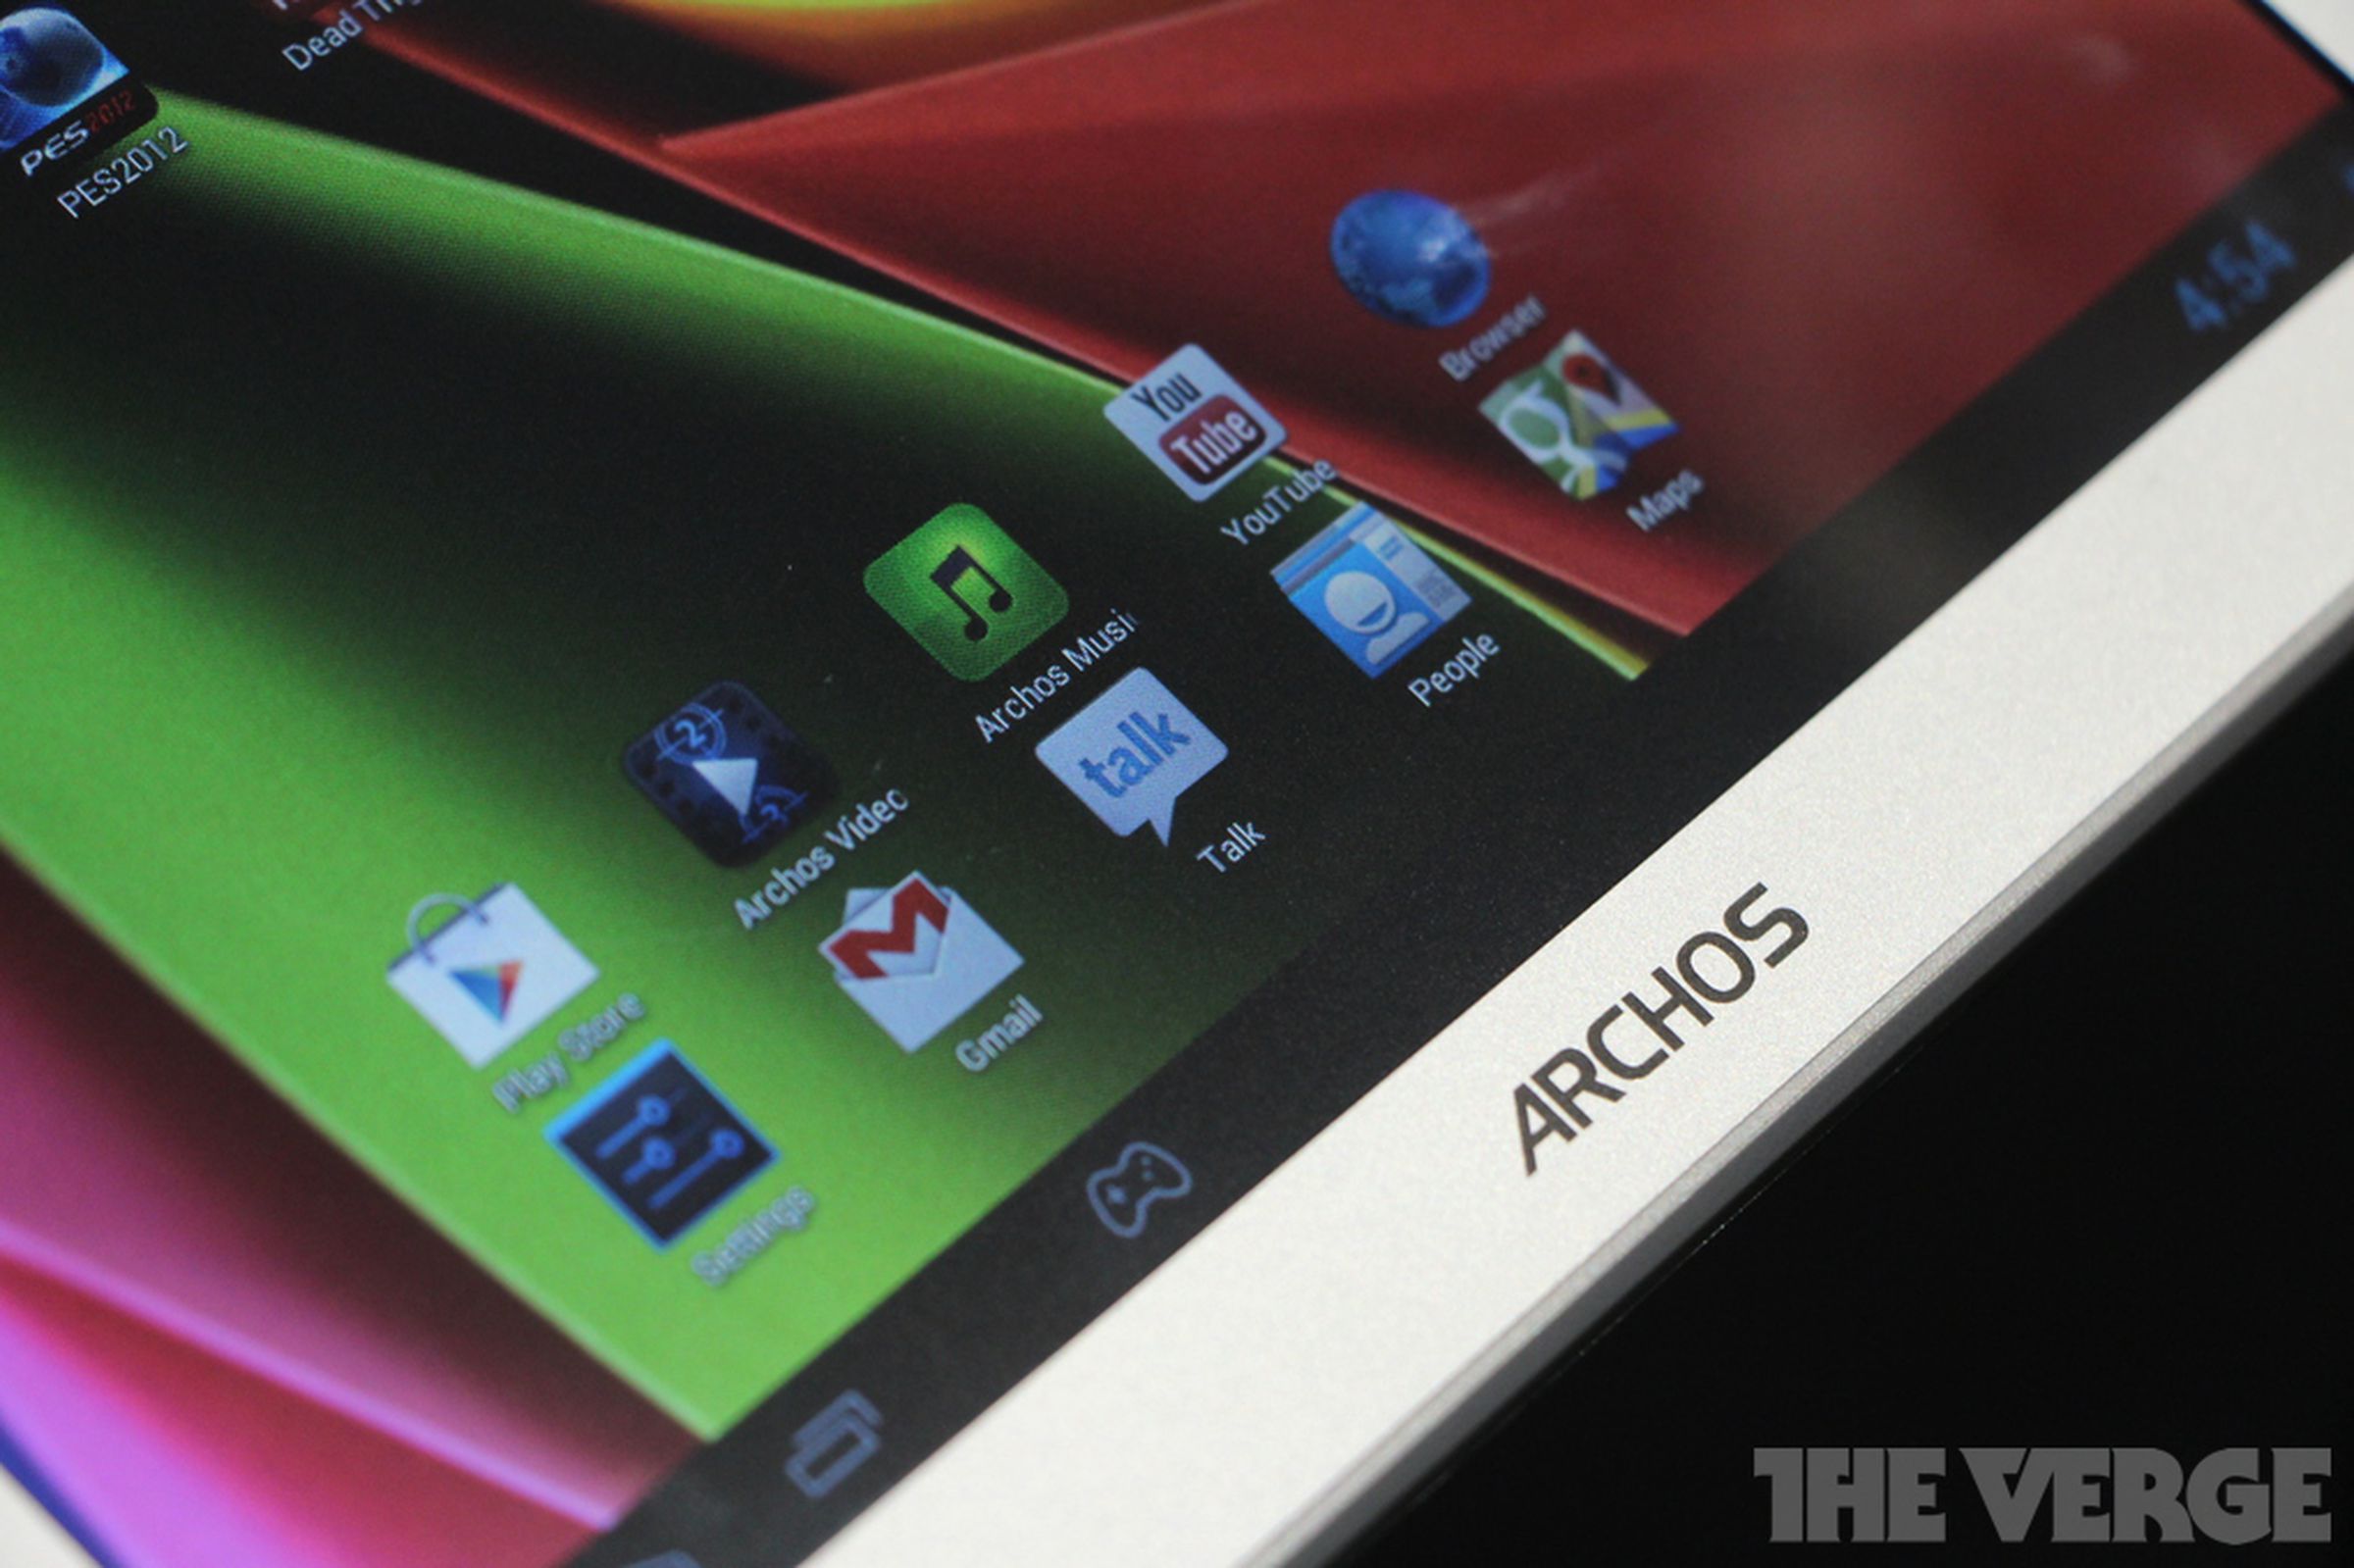 Archos GamePad hands-on photos